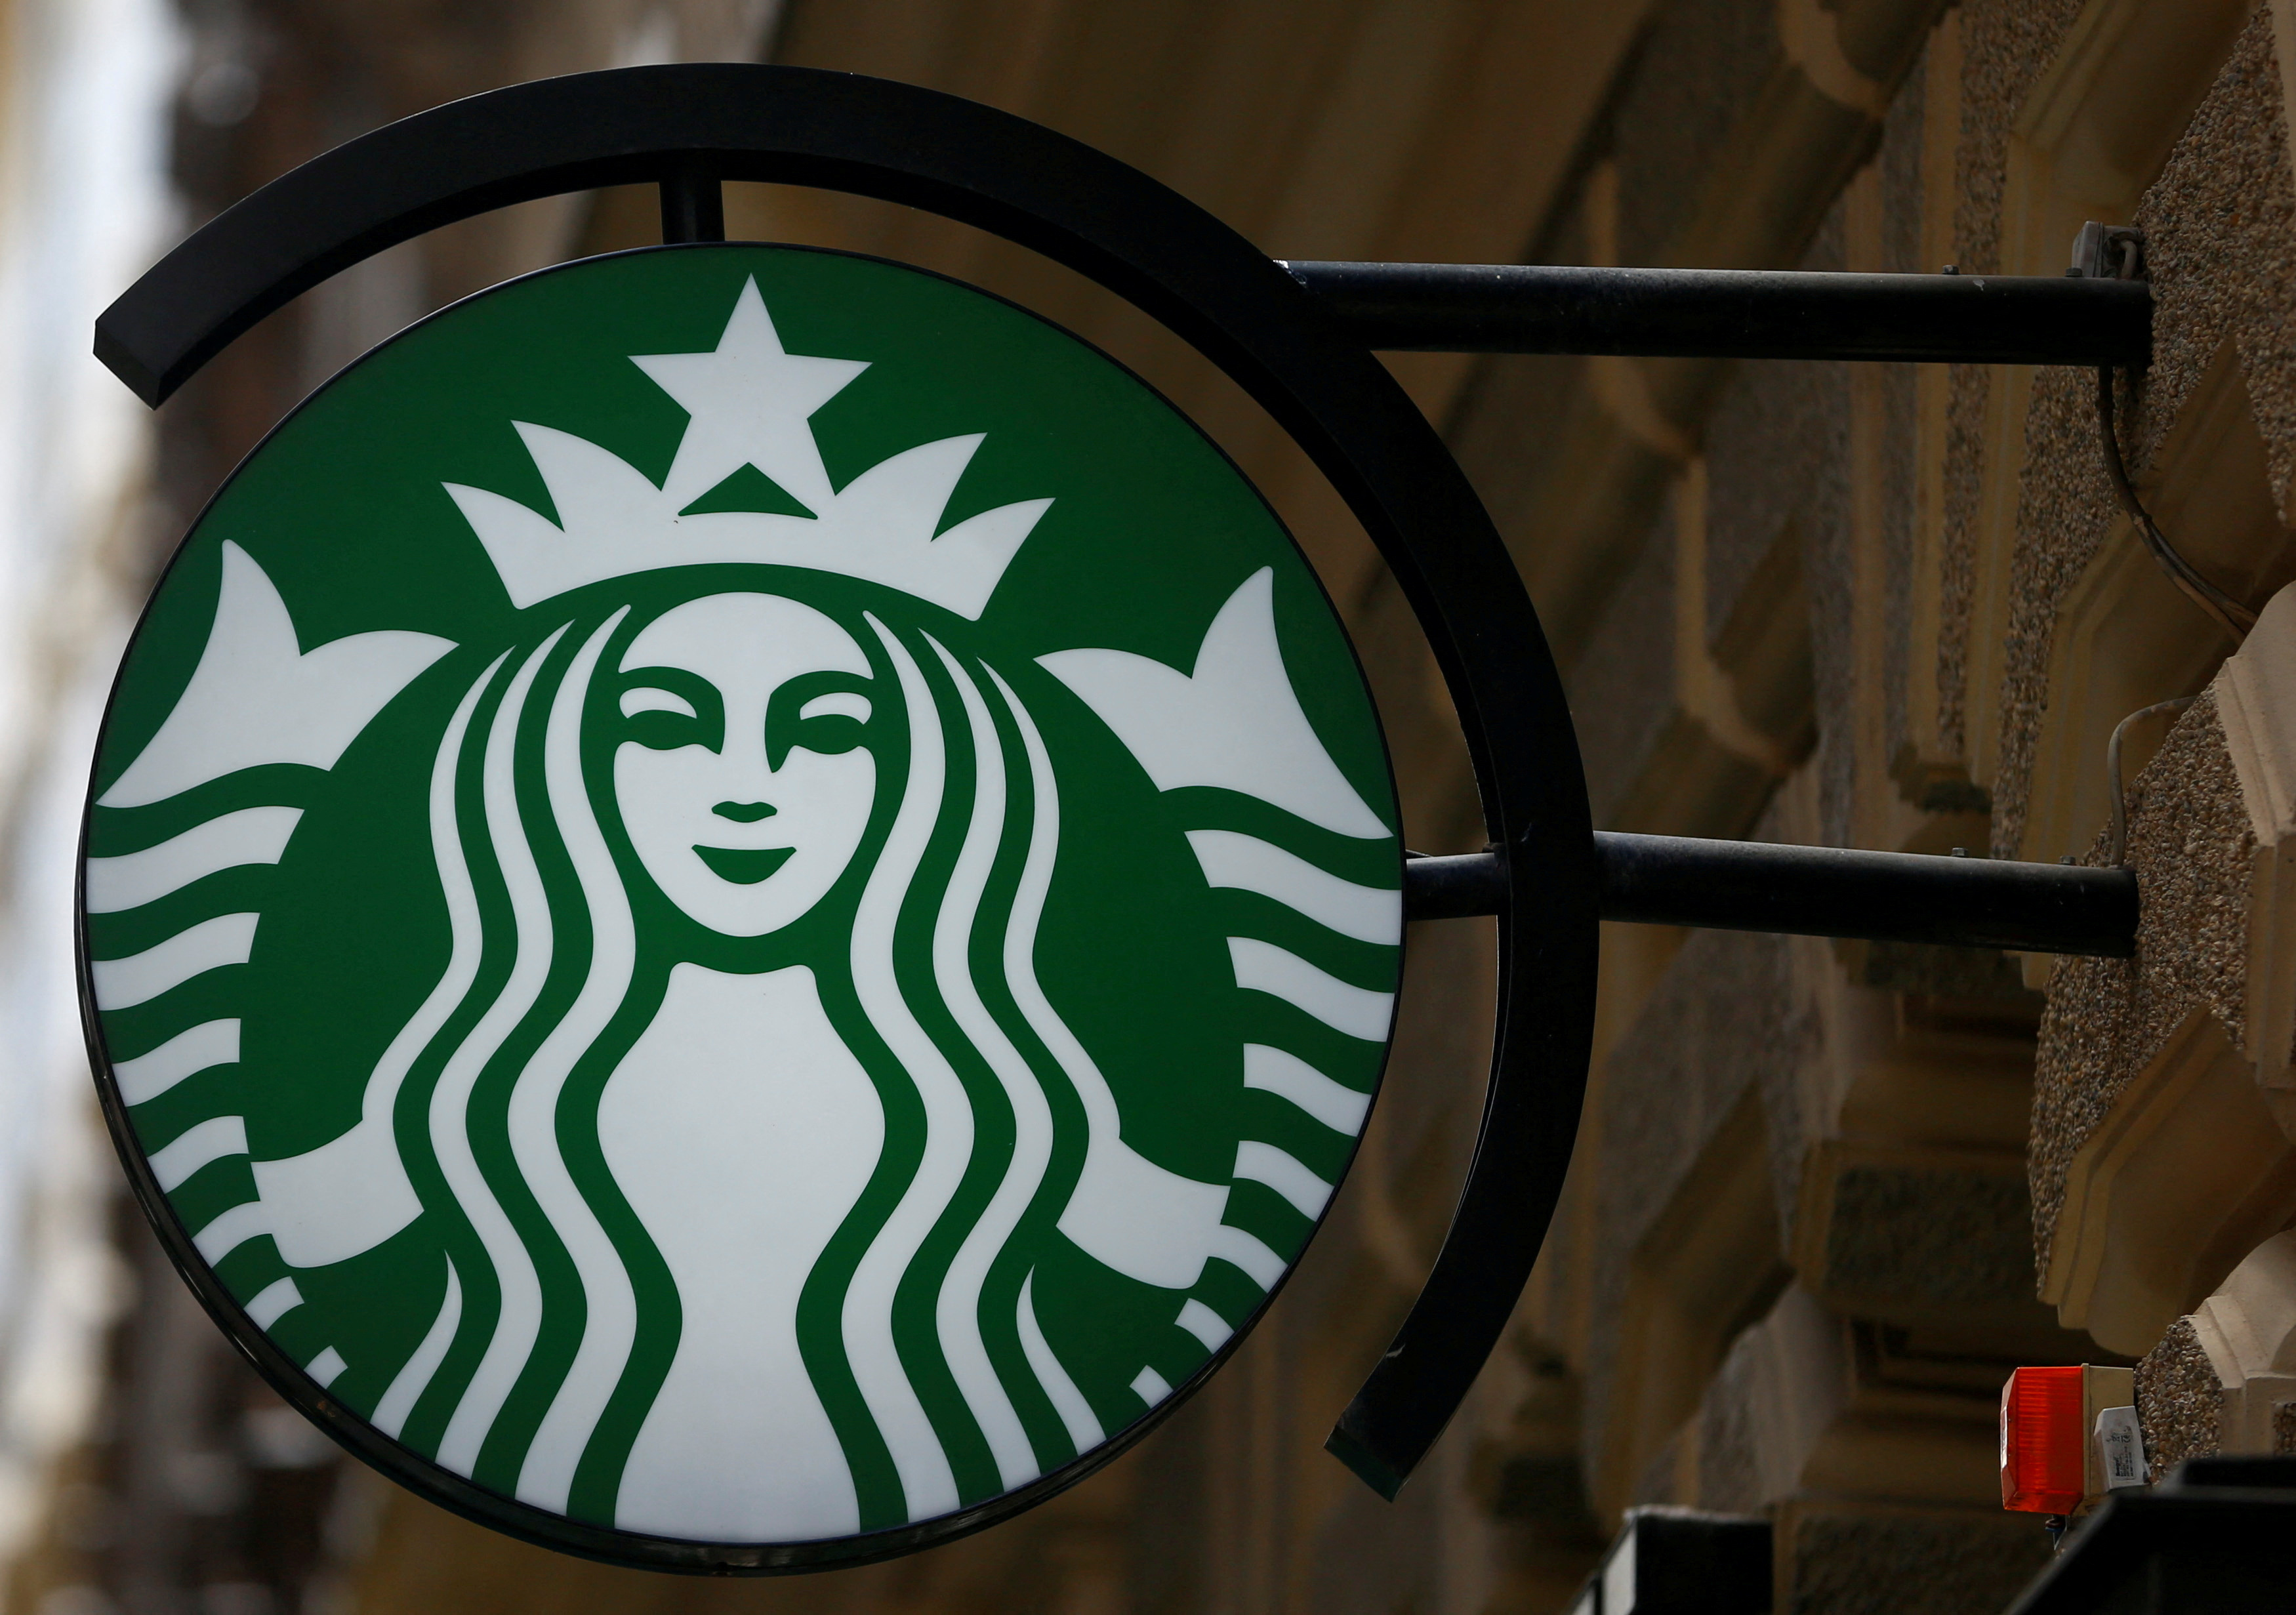 A Starbucks logo is seen at a Starbucks coffee shop in Vienna